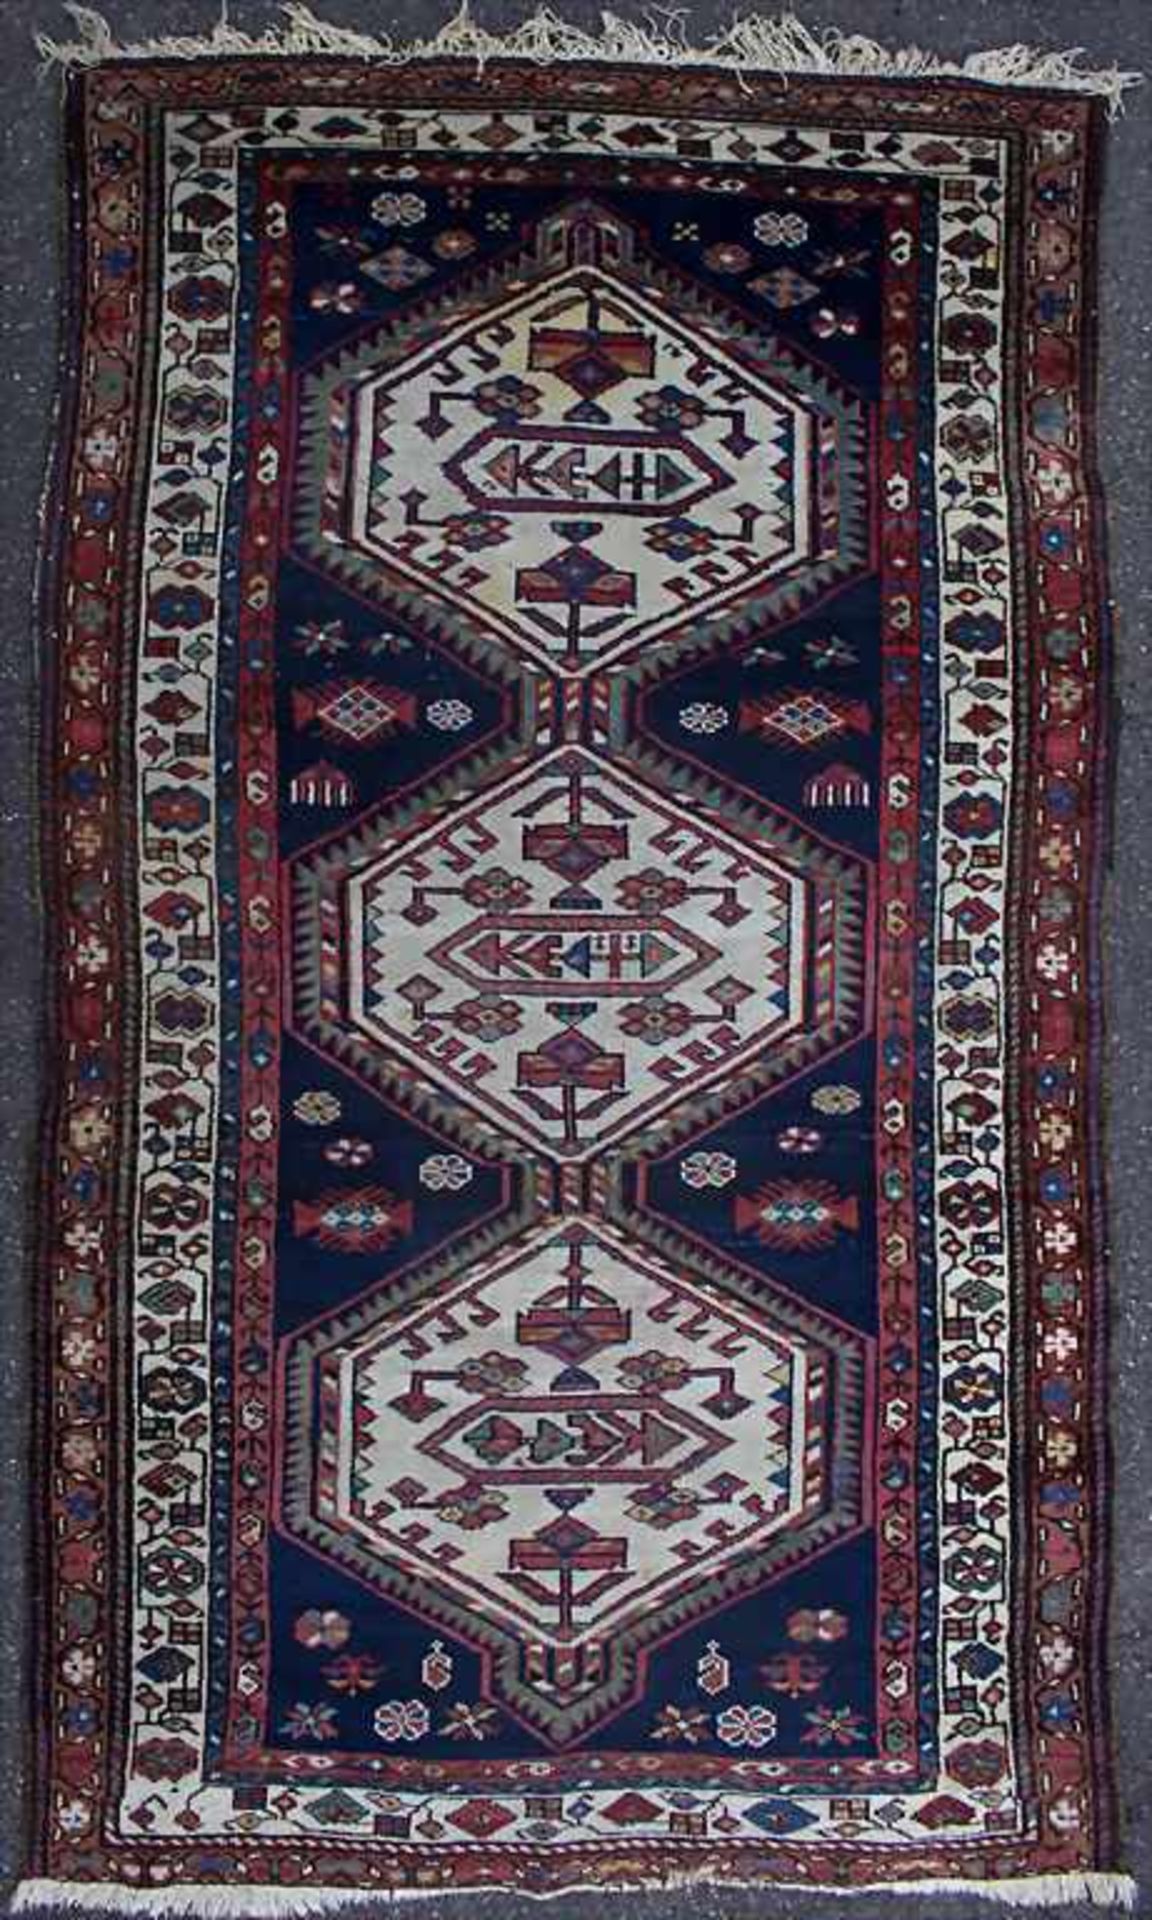 Orientteppich 'Hamadan' / An oriental carpet 'Hamadan'